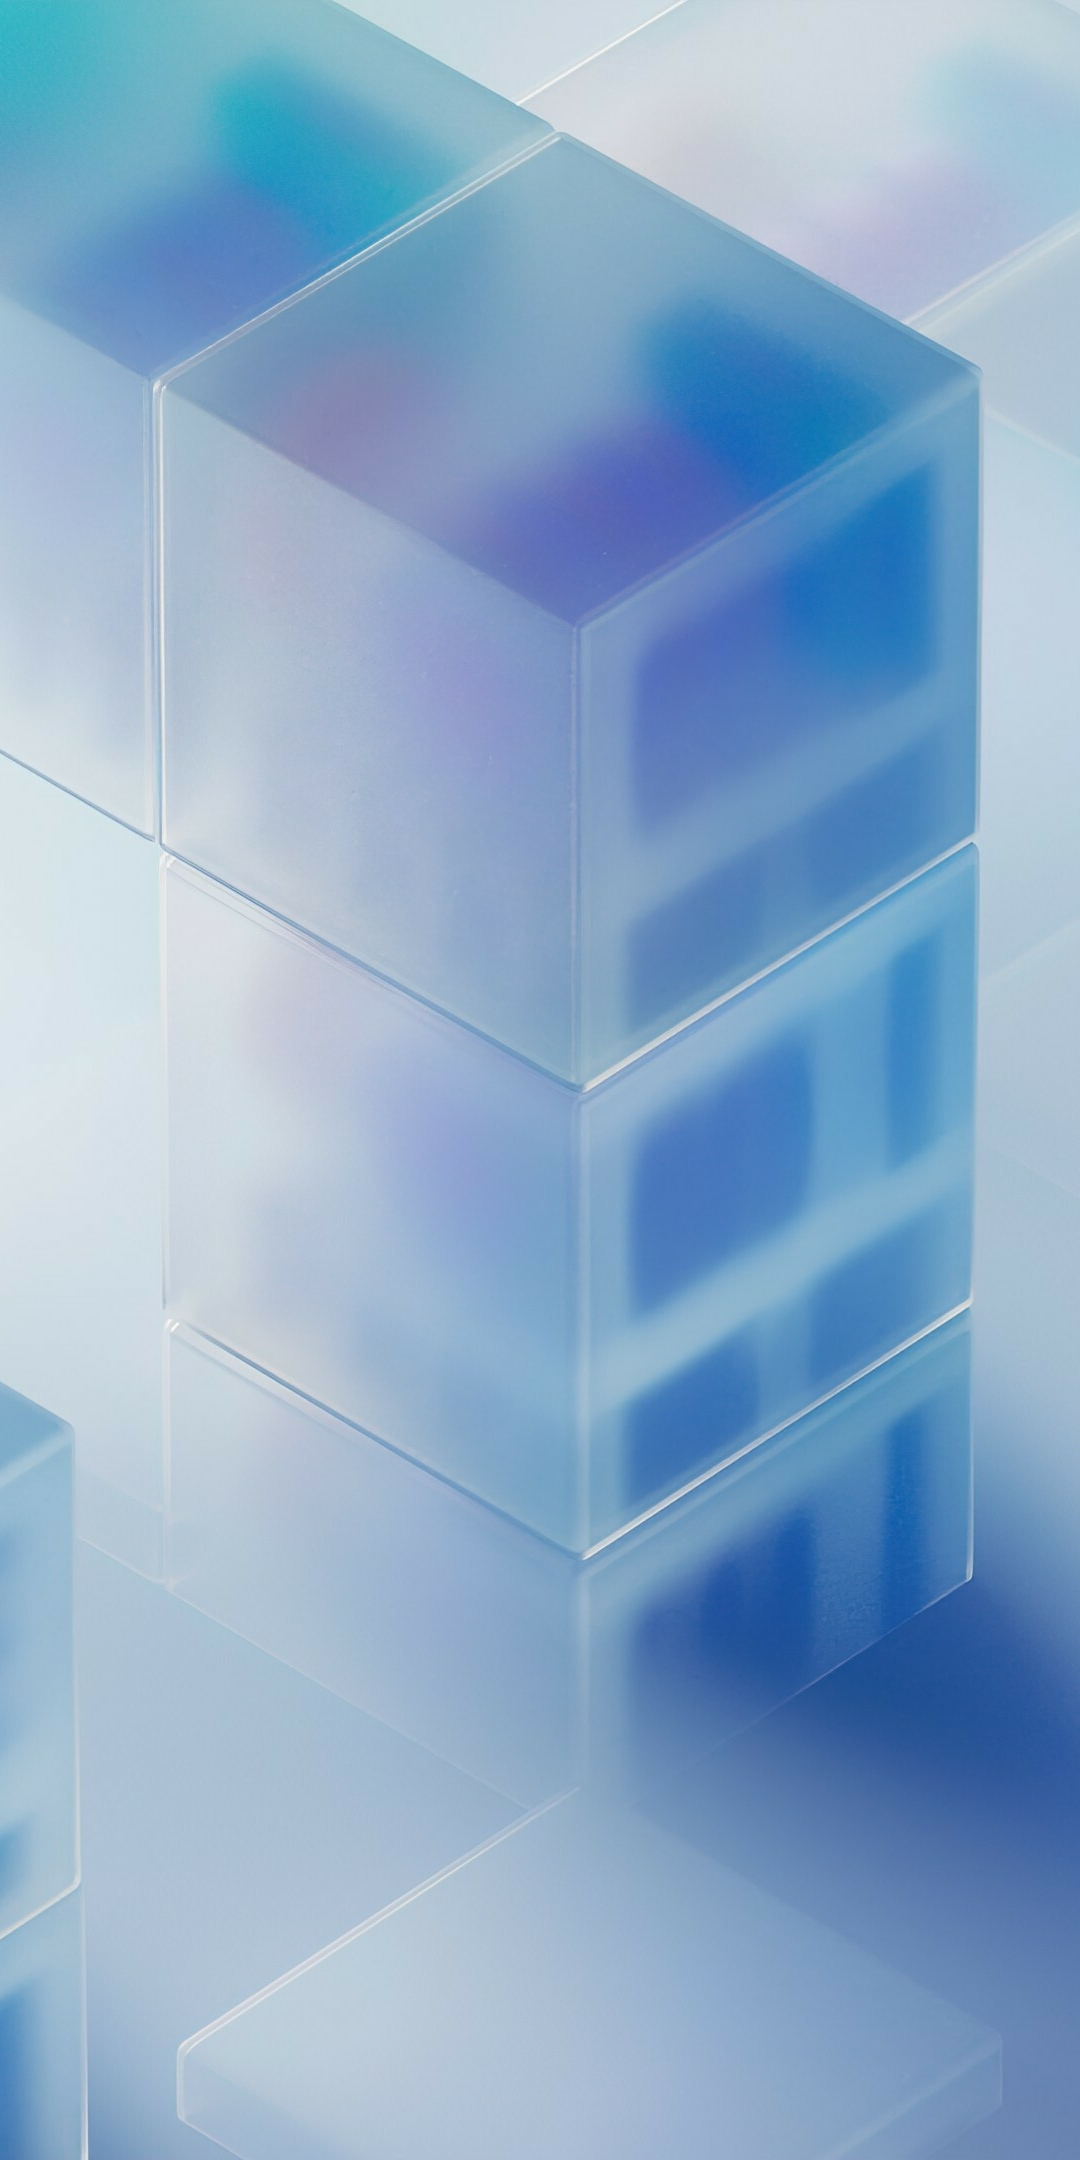 Cubical structure, windows 365, Microsoft stock, blue theme, 1080x2160 wallpaper